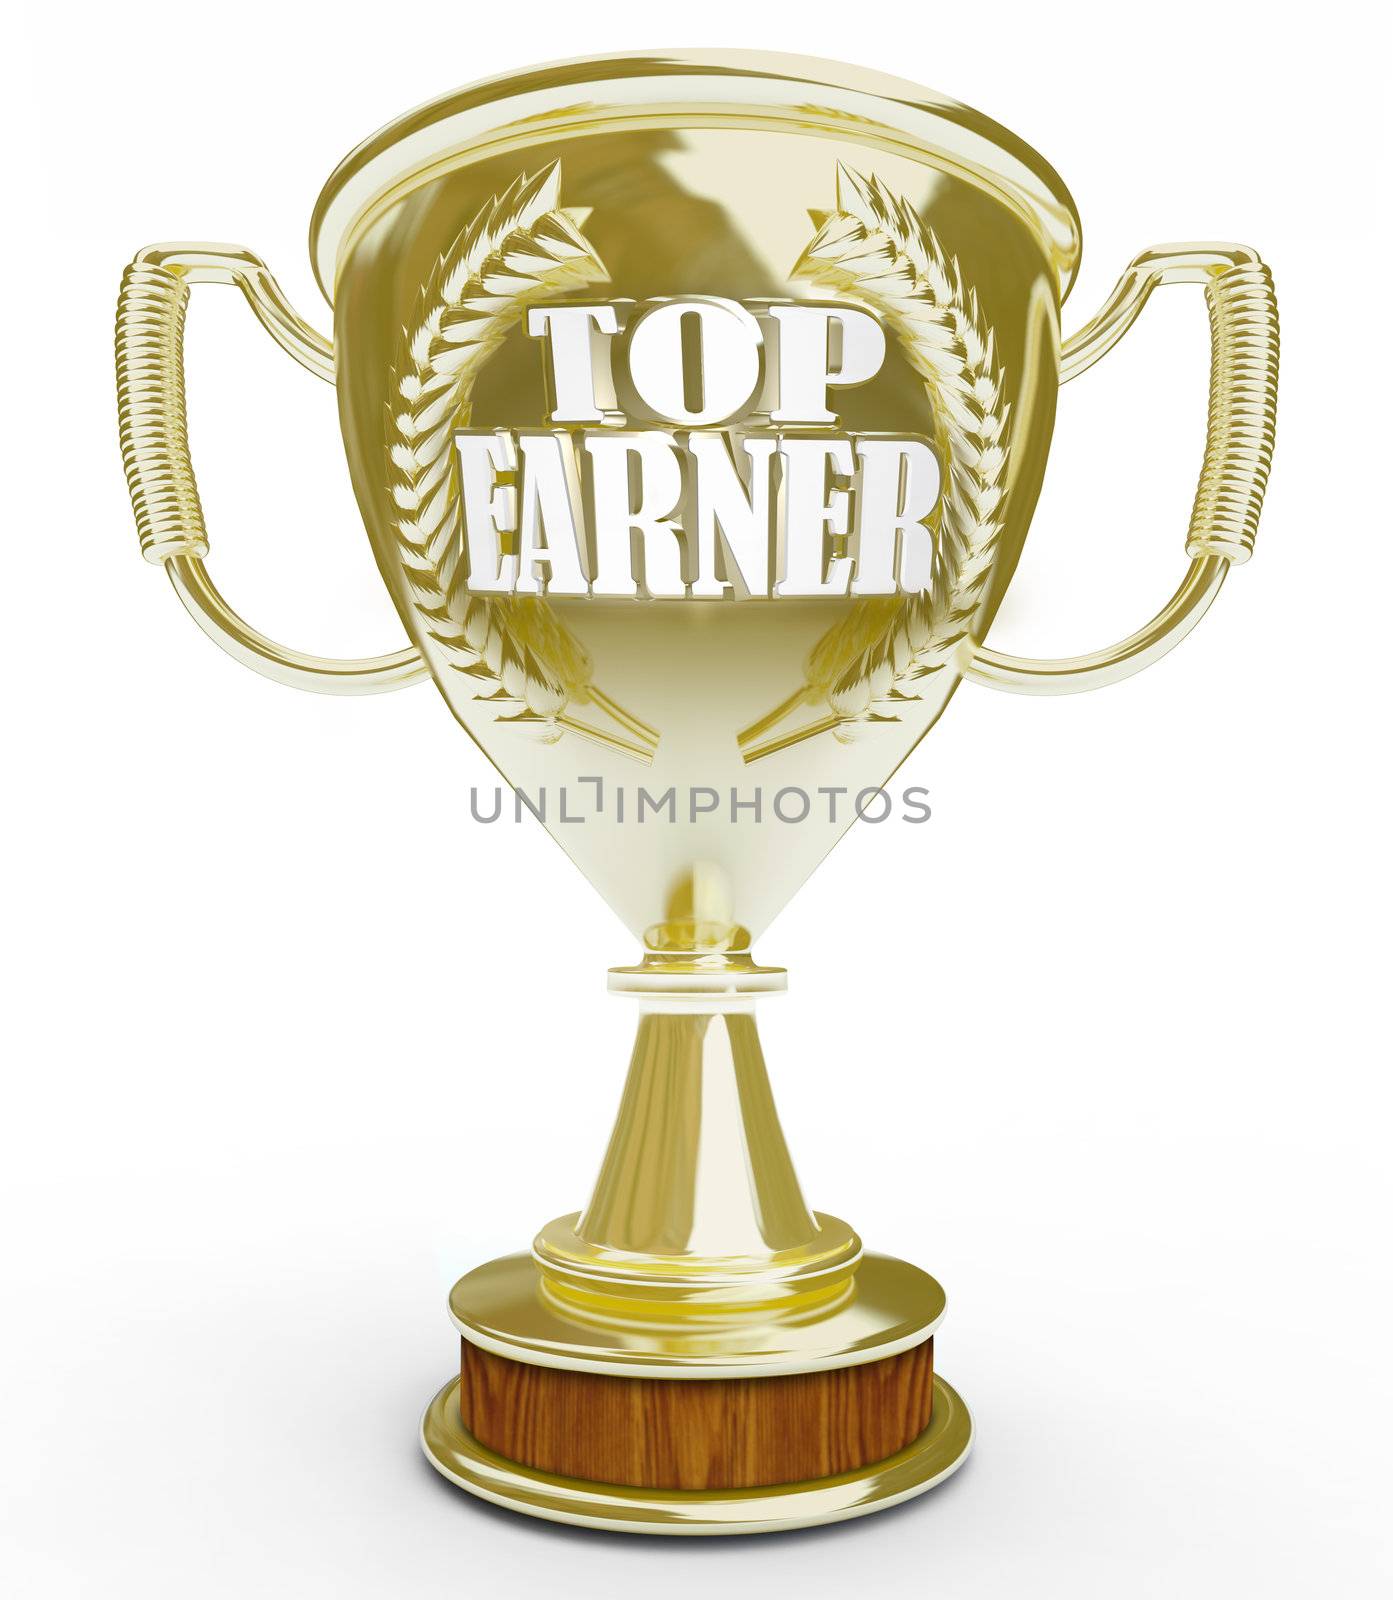 Top Earner - Words on Golden Trophy by iQoncept